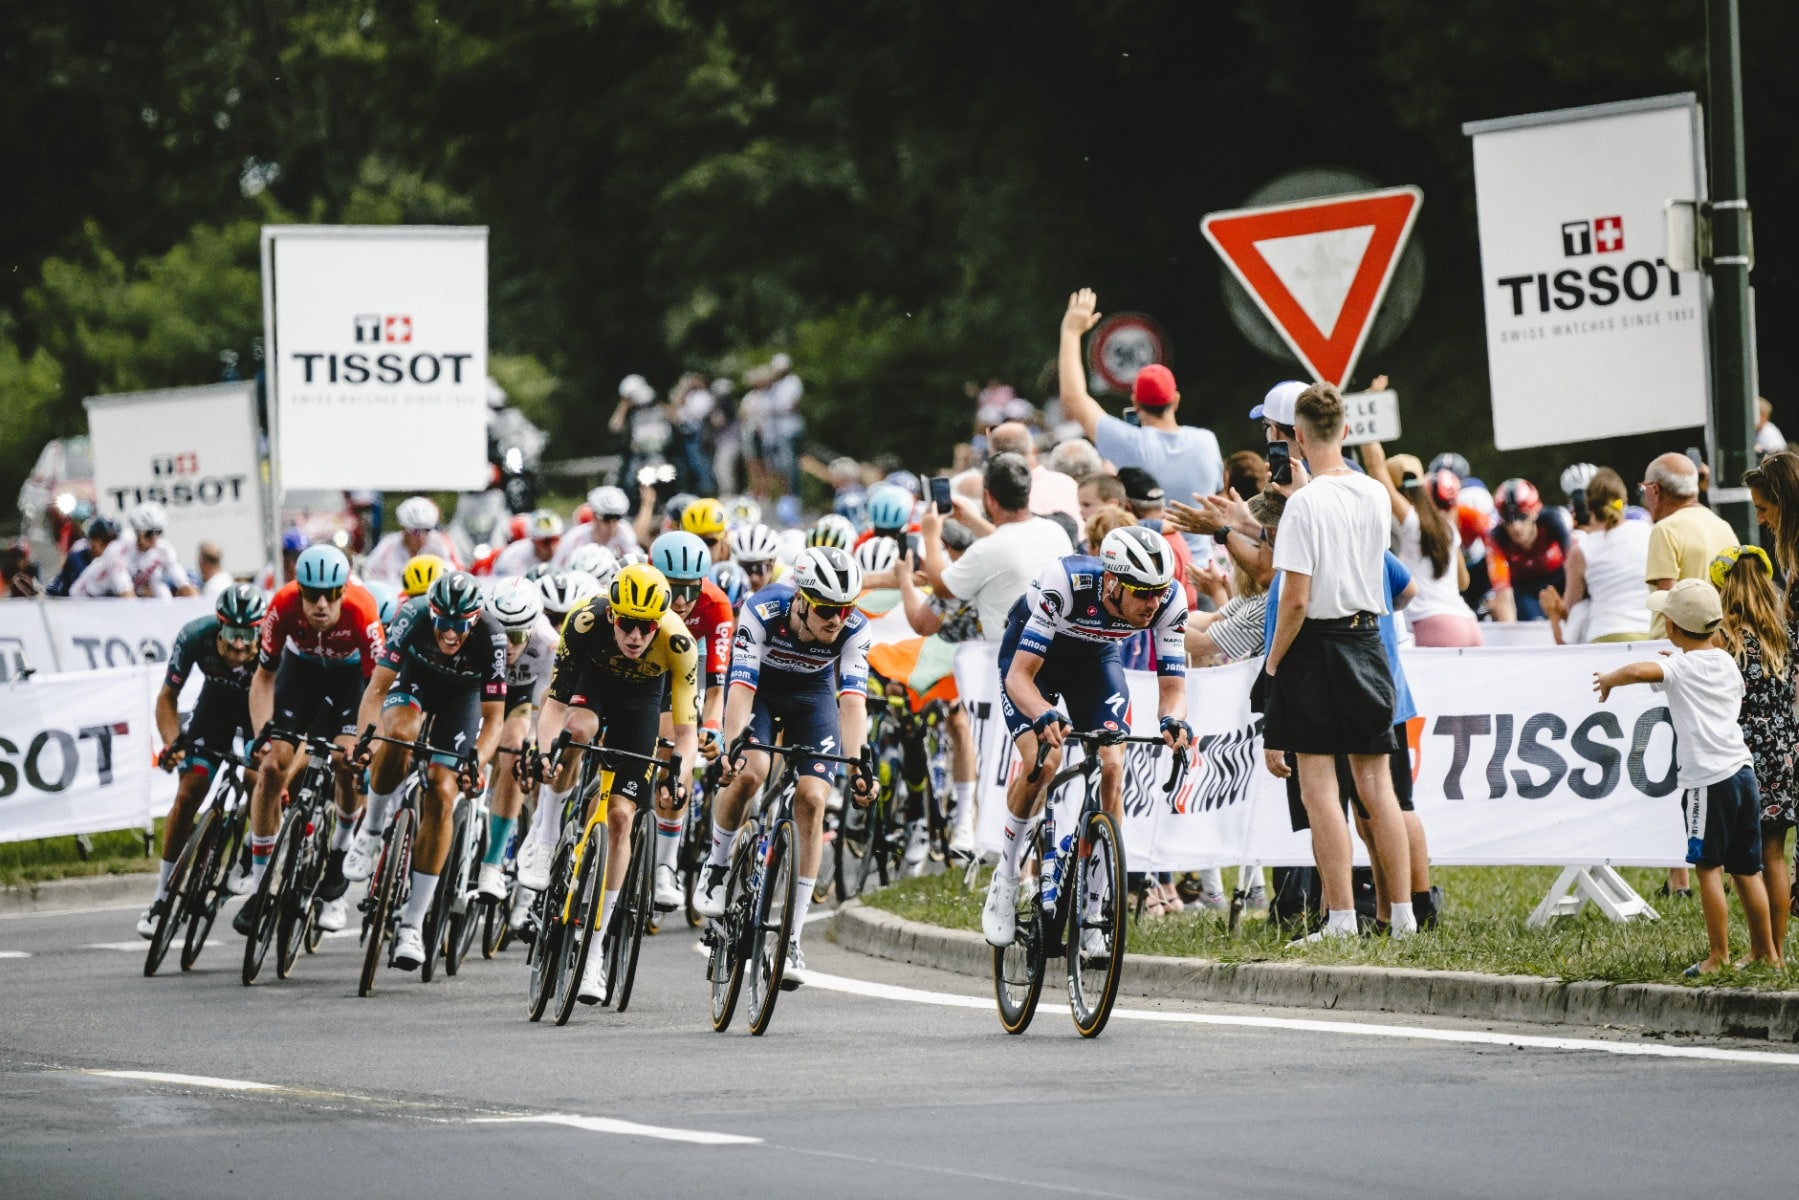 Tissot y el Tour de Francia: homenaje a un legado de cronometraje e innovación